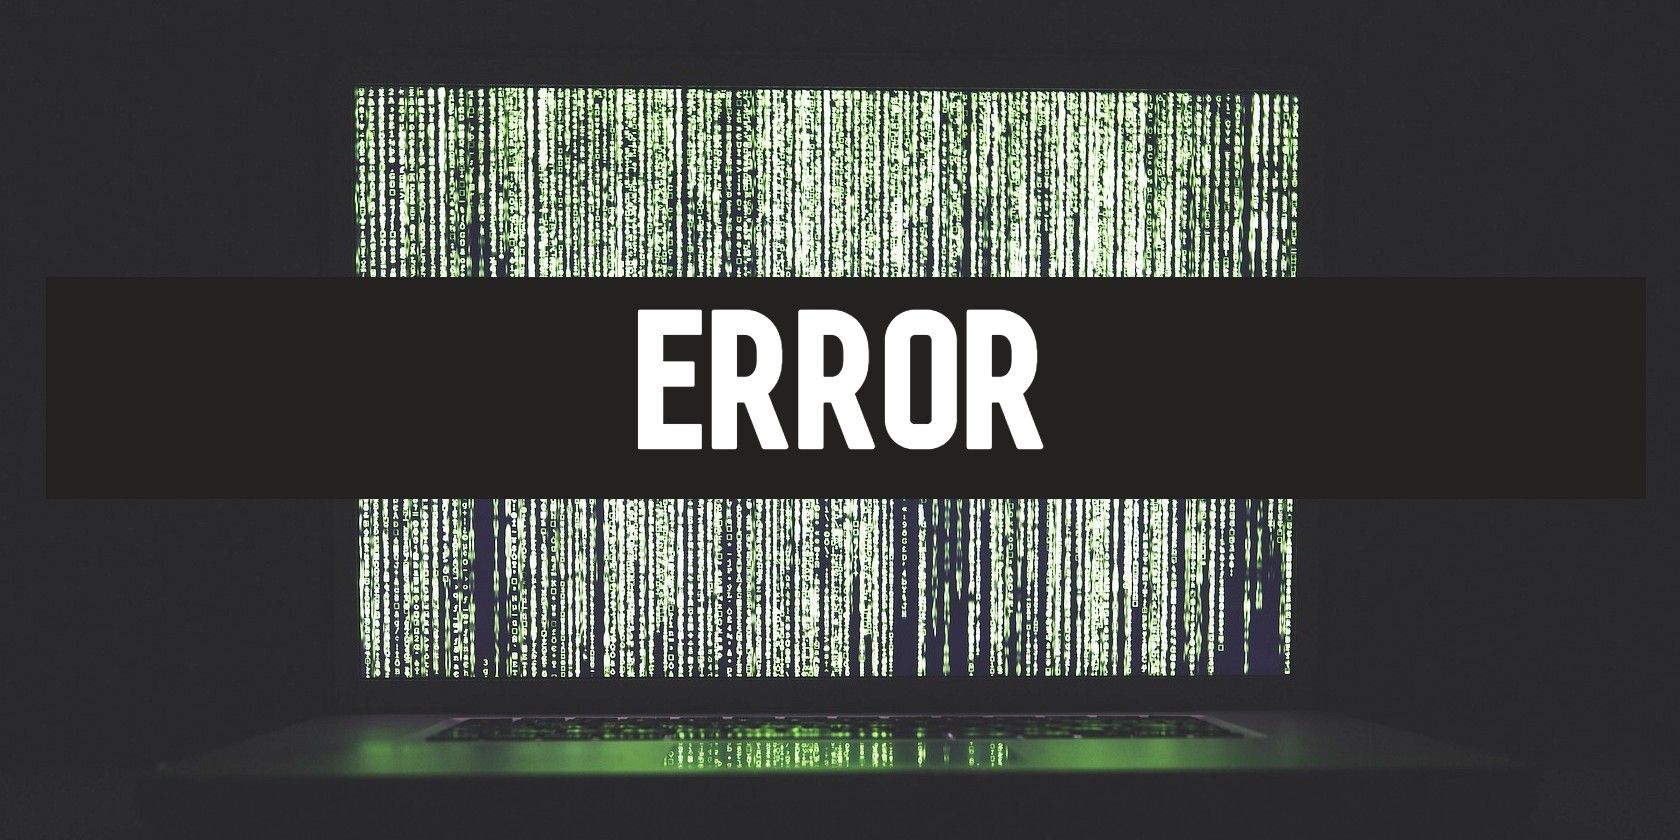 DDoS site down attack error server